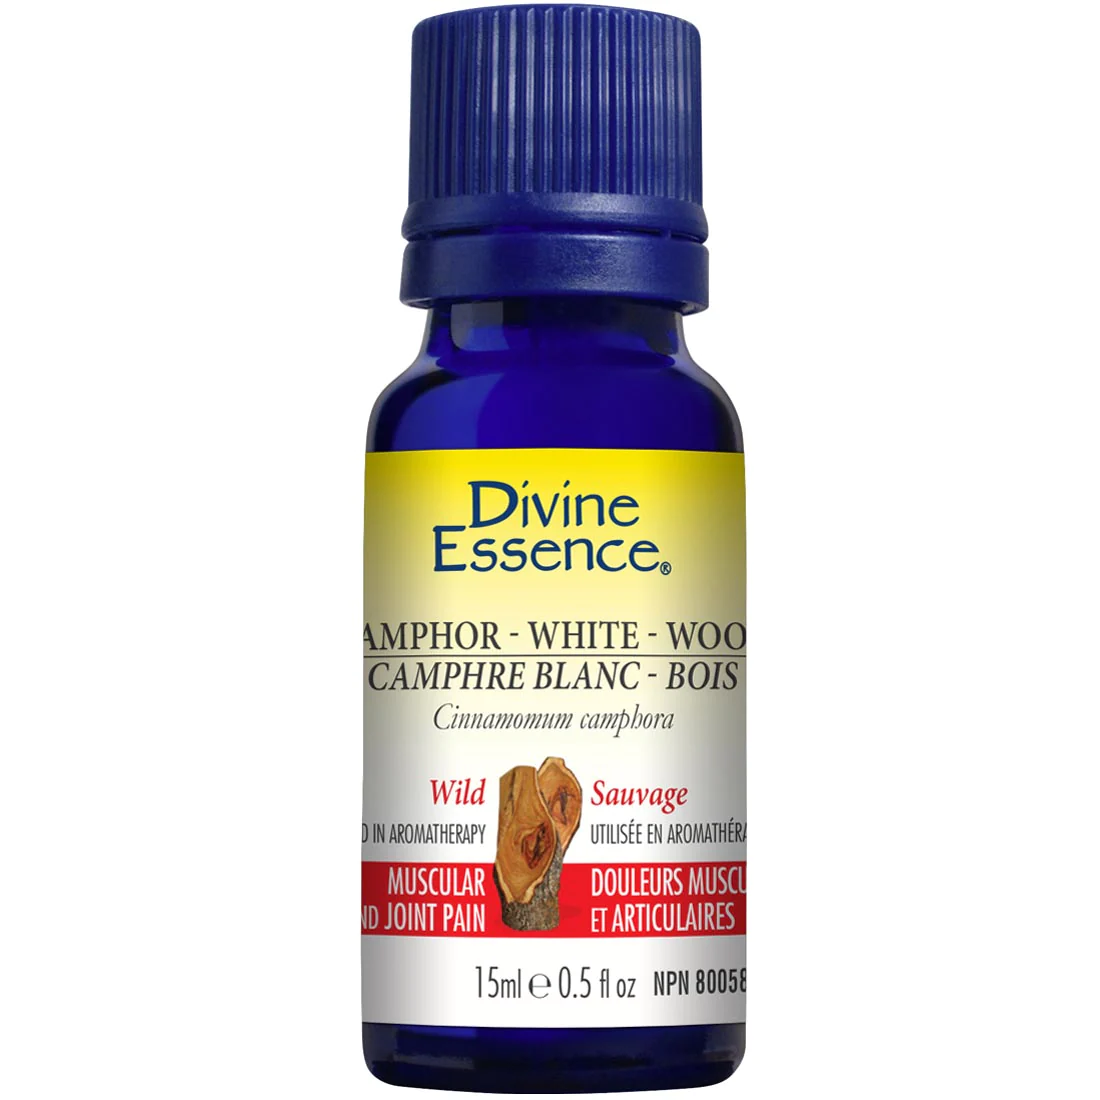 Divine Essence Camphor White Wood 15ml